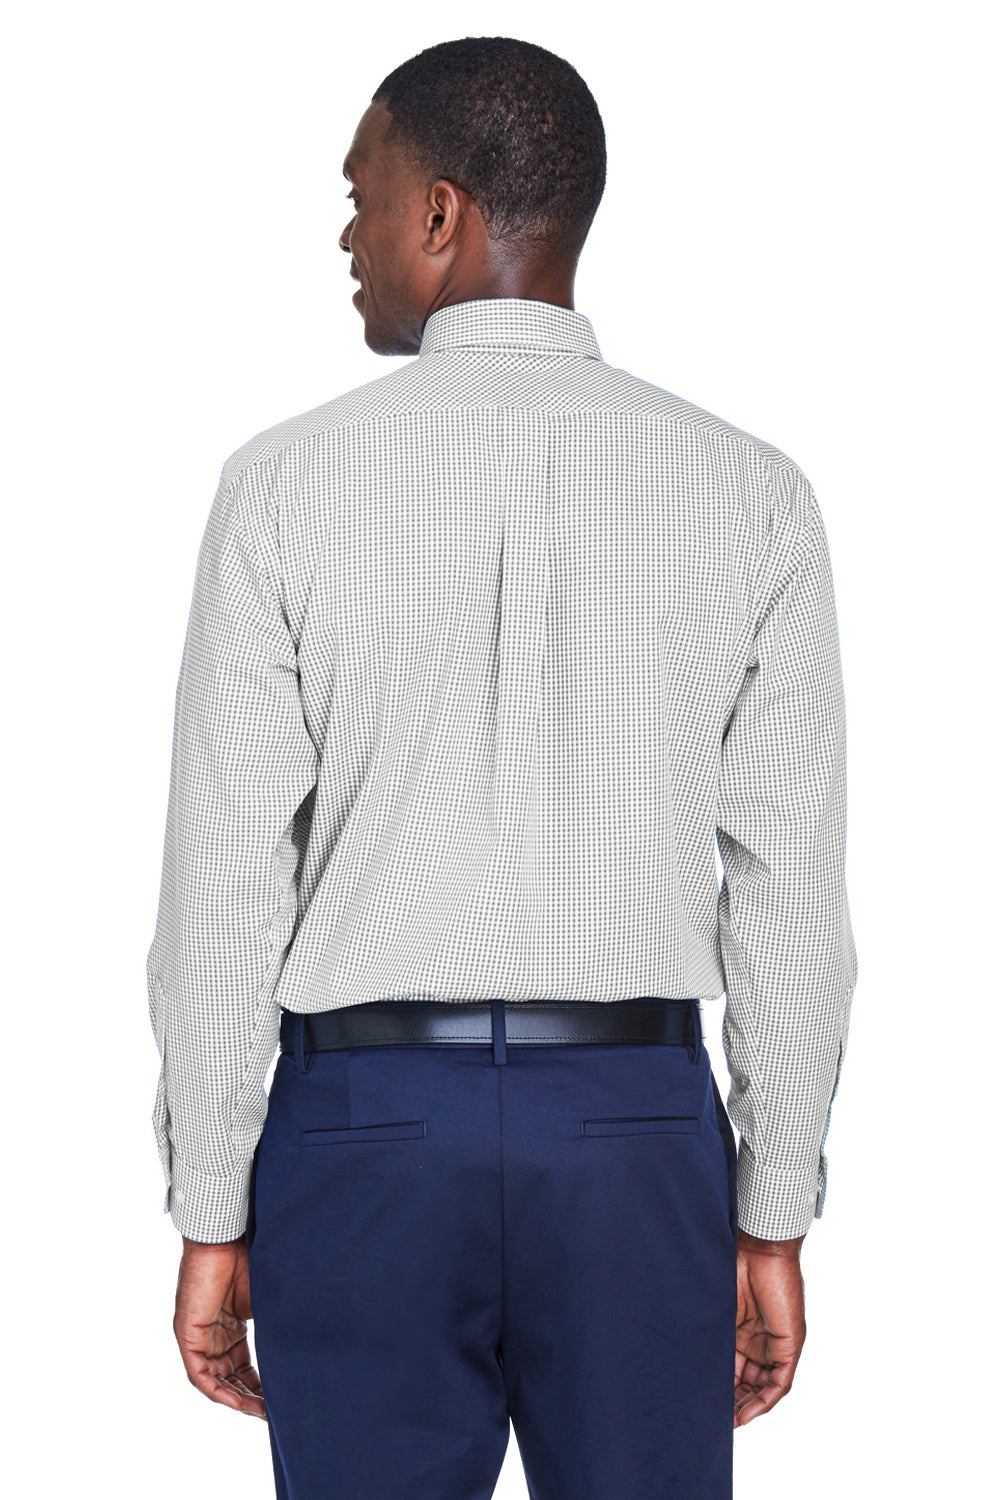 Devon & Jones D640 Mens Crown Woven Collection Wrinkle Resistant Long Sleeve Button Down Shirt w/ Pocket Silver Grey Back